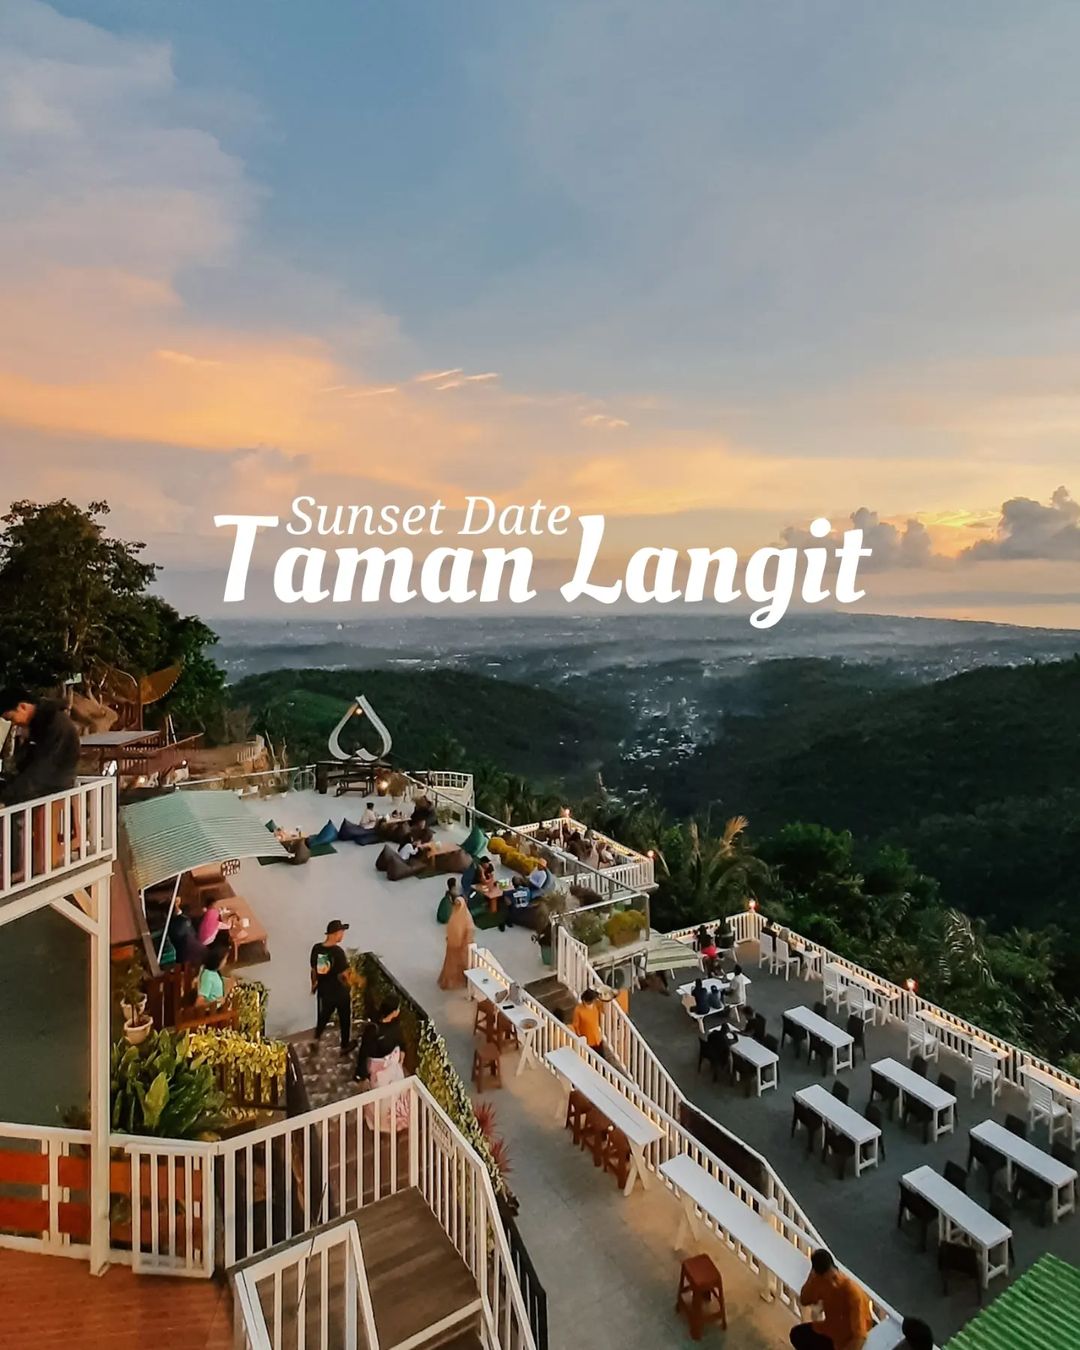 Review Taman Langit Lombok Image From @mtm Go_